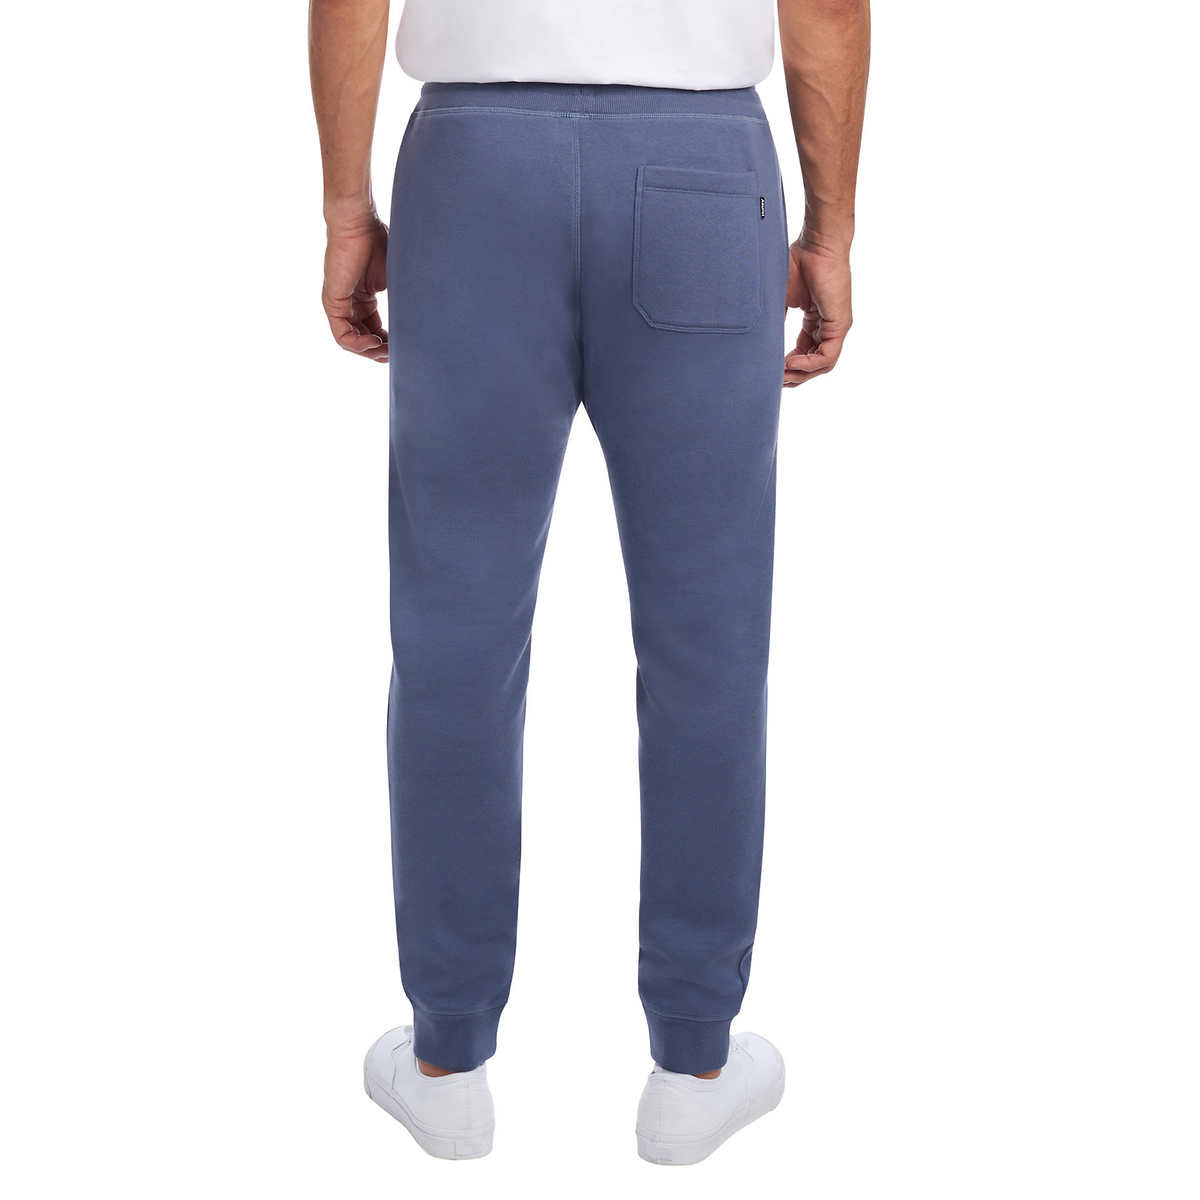 Hurley Men’s Ultra Soft Cotton Blend Fleece Casual Active Pants Joggers